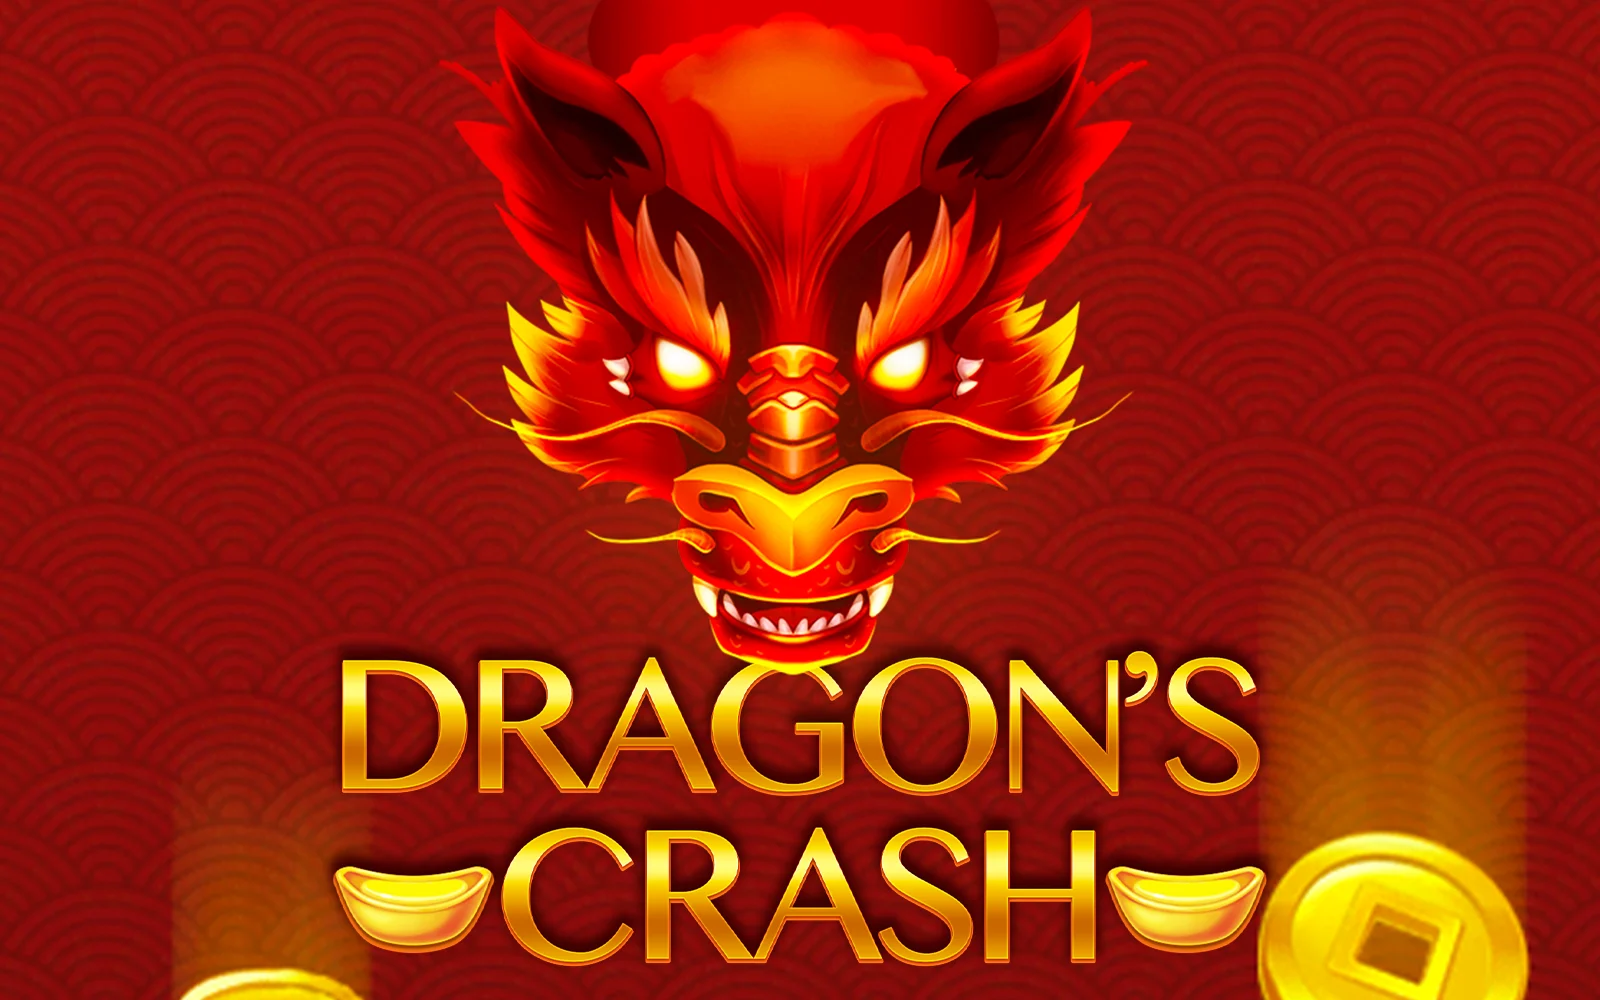 Joacă Dragon's Crash în cazinoul online Starcasino.be